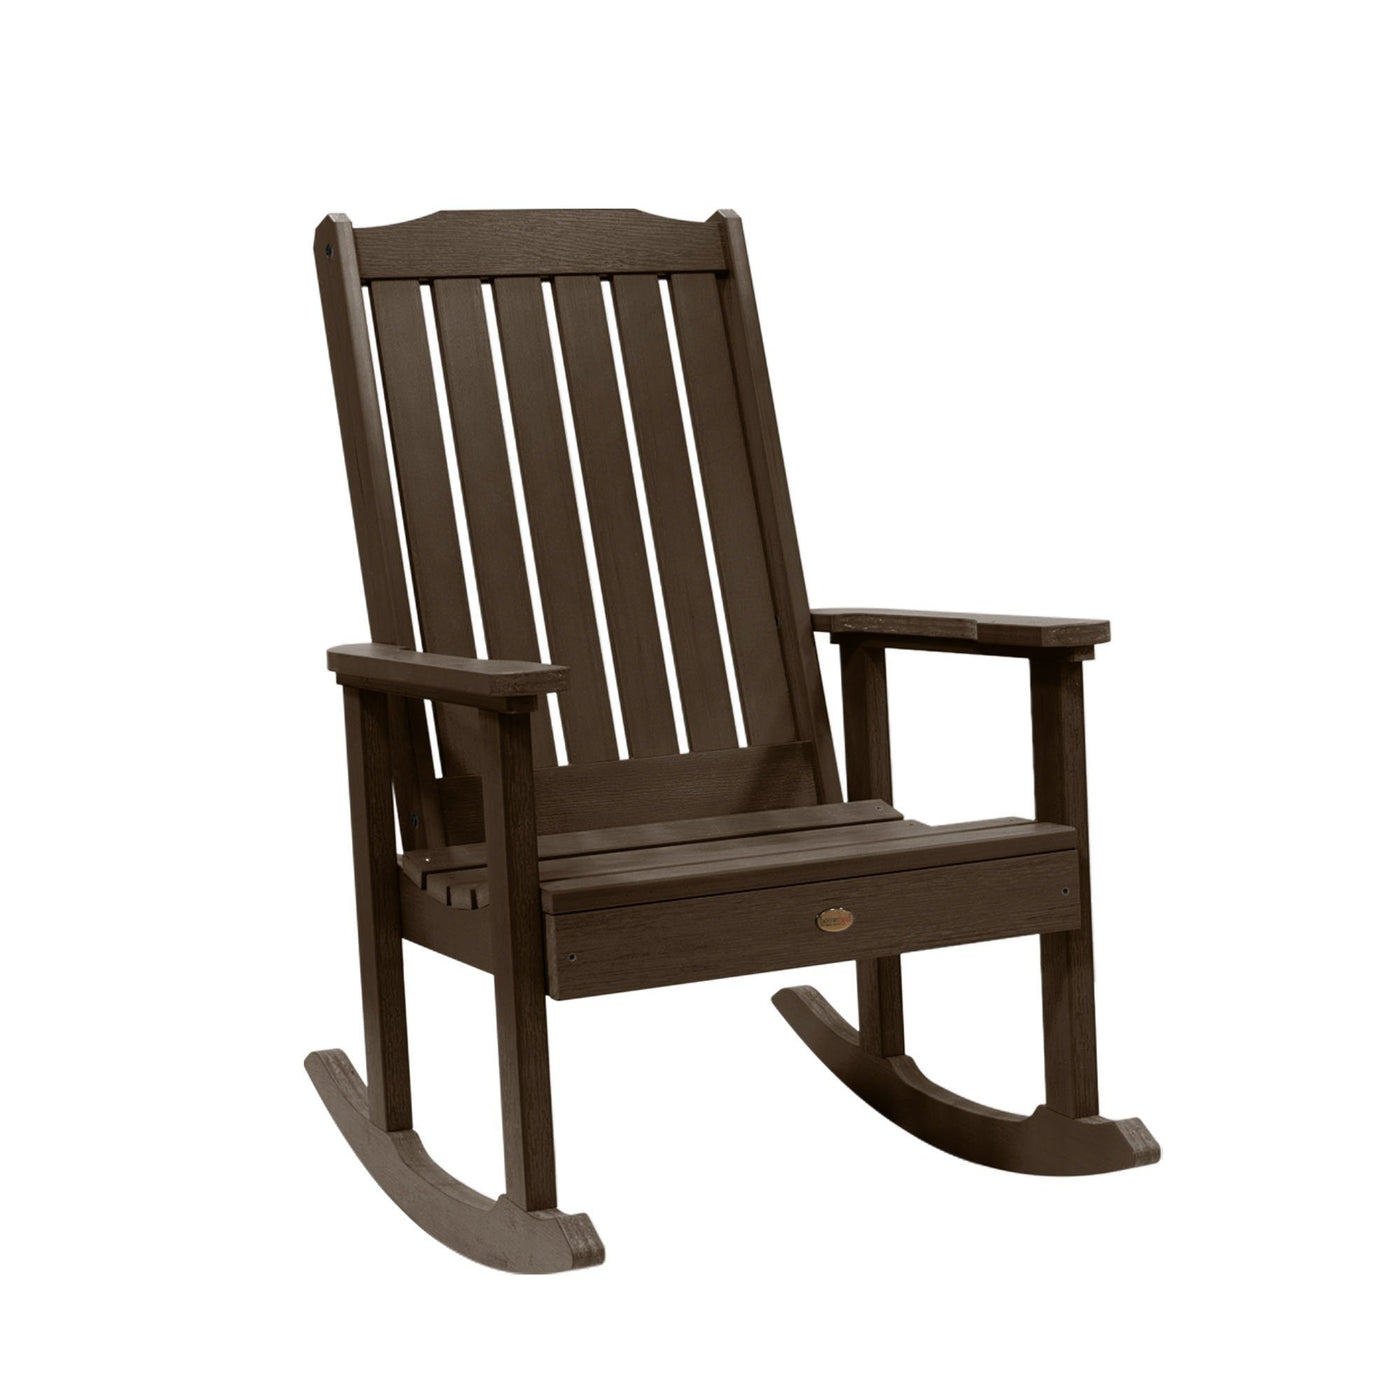 Refurbished Lehigh Rocking Chair Highwood USA Weathered Acorn 